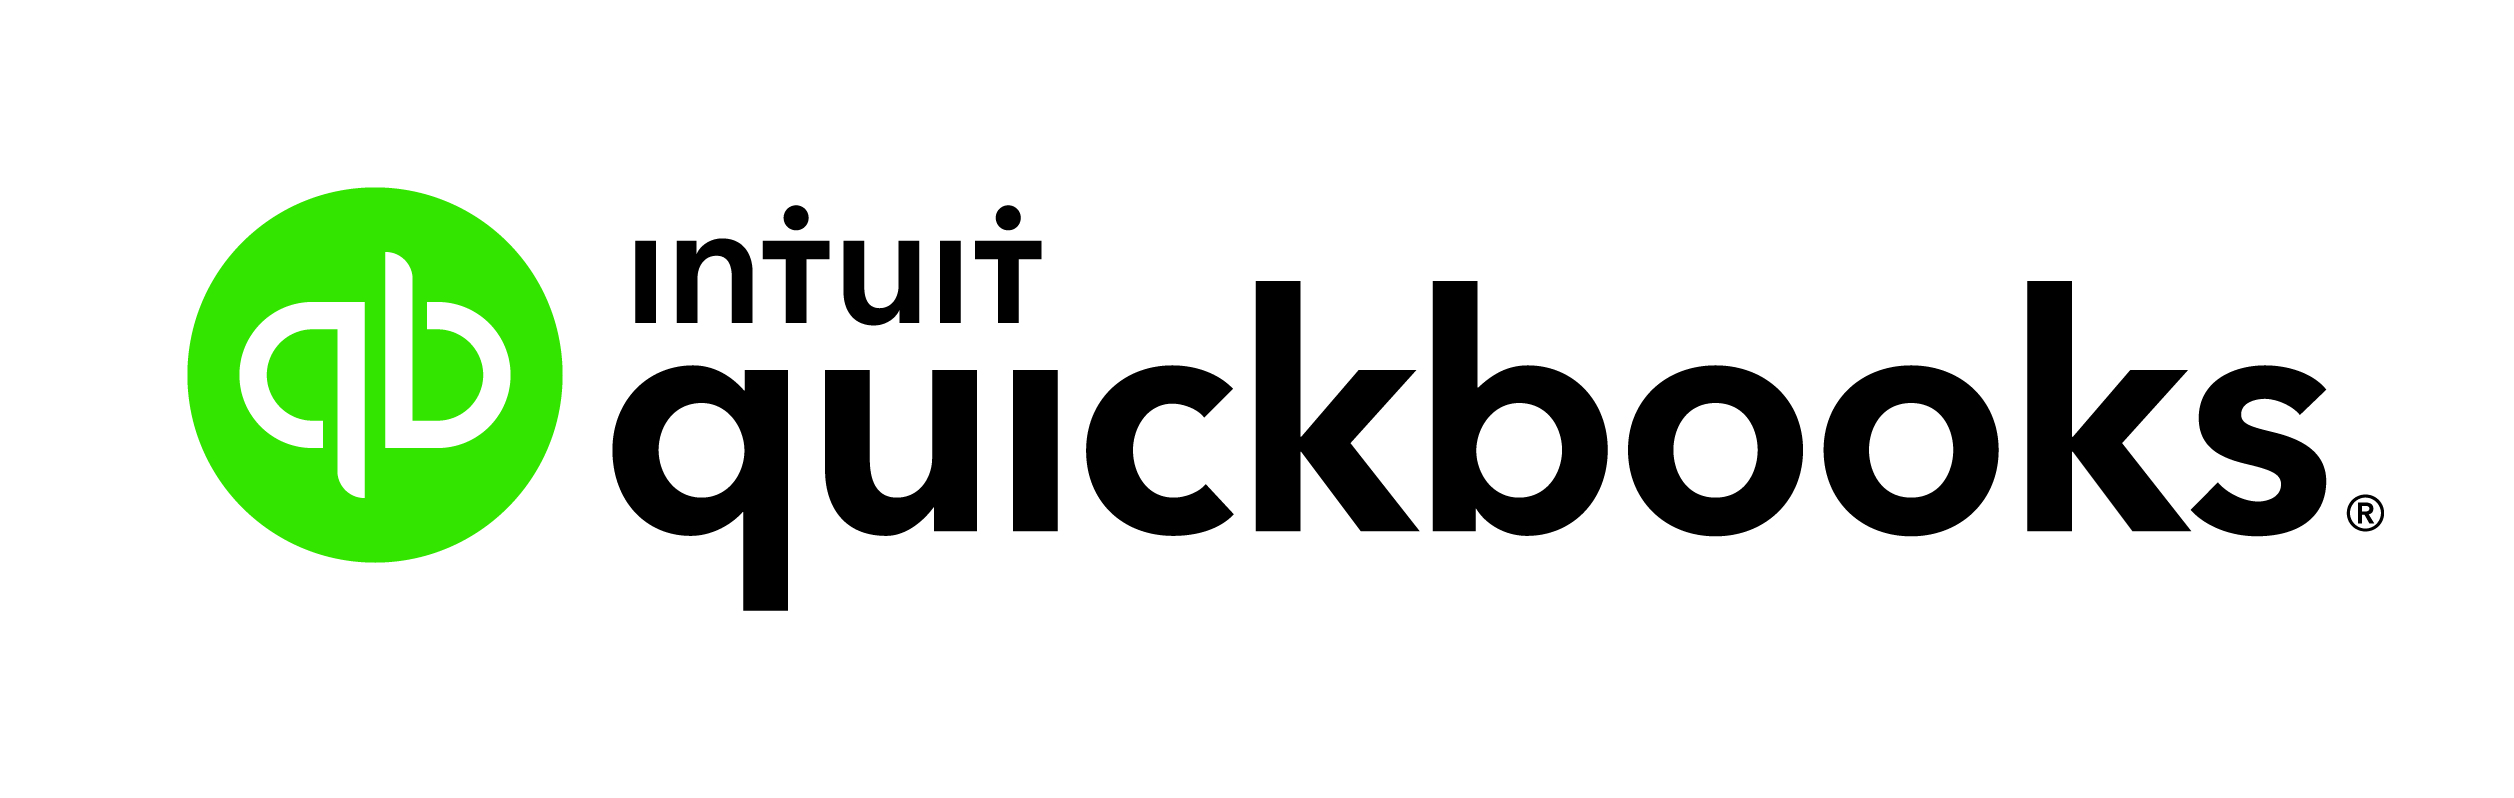 2018 intuit quickbooks logo 1  5af09f890b995